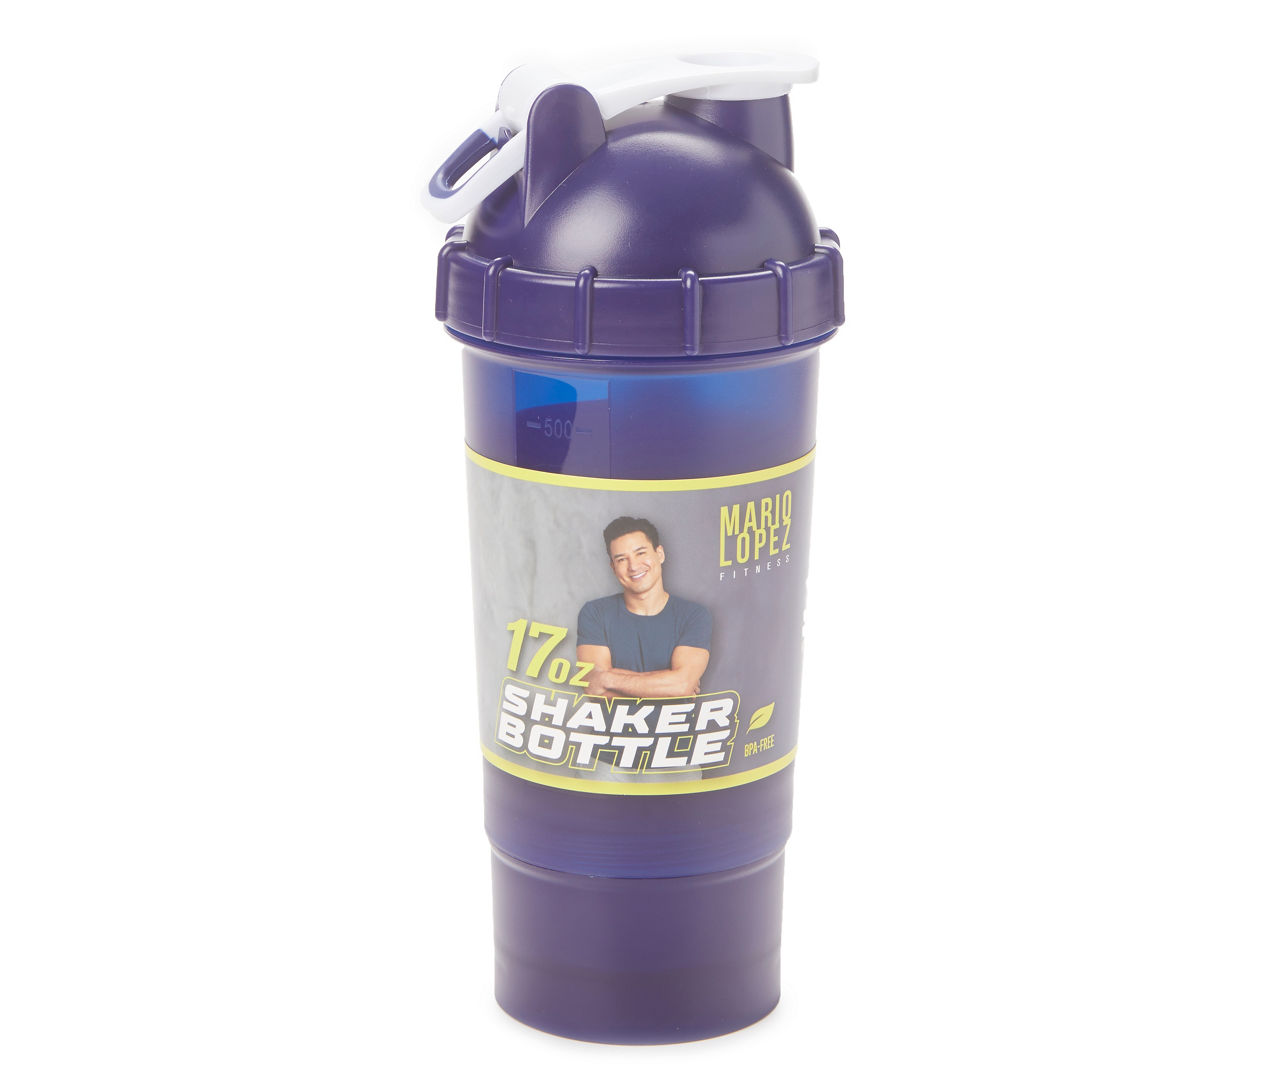 Mario Lopez Fitness Blue Shaker Bottle, 17 oz.